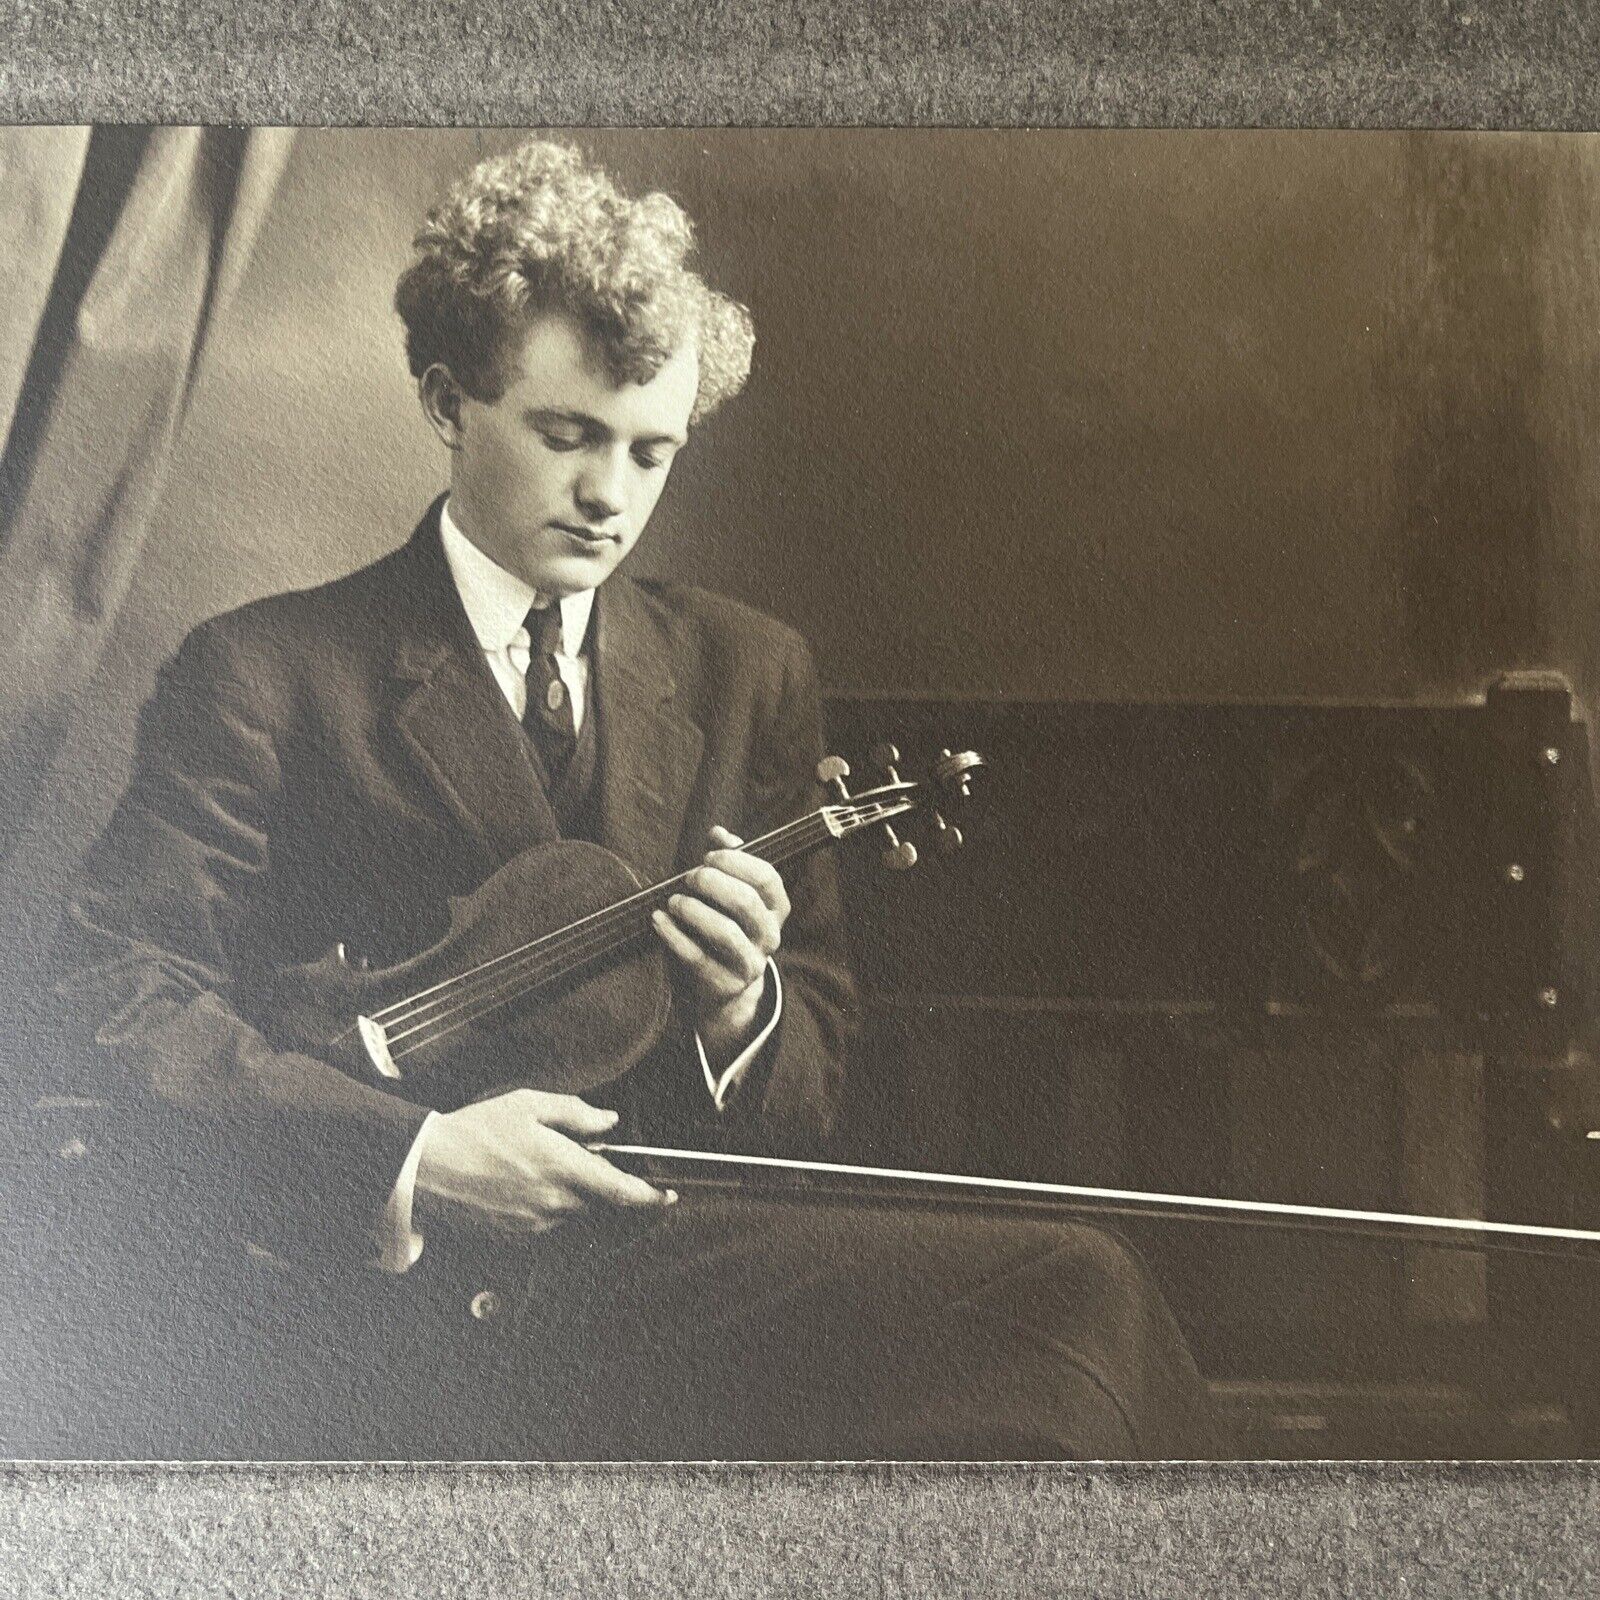 VTG Violinist Classical Musician Man SEPIA 1900s Pasadena Curly Hair PHOTO